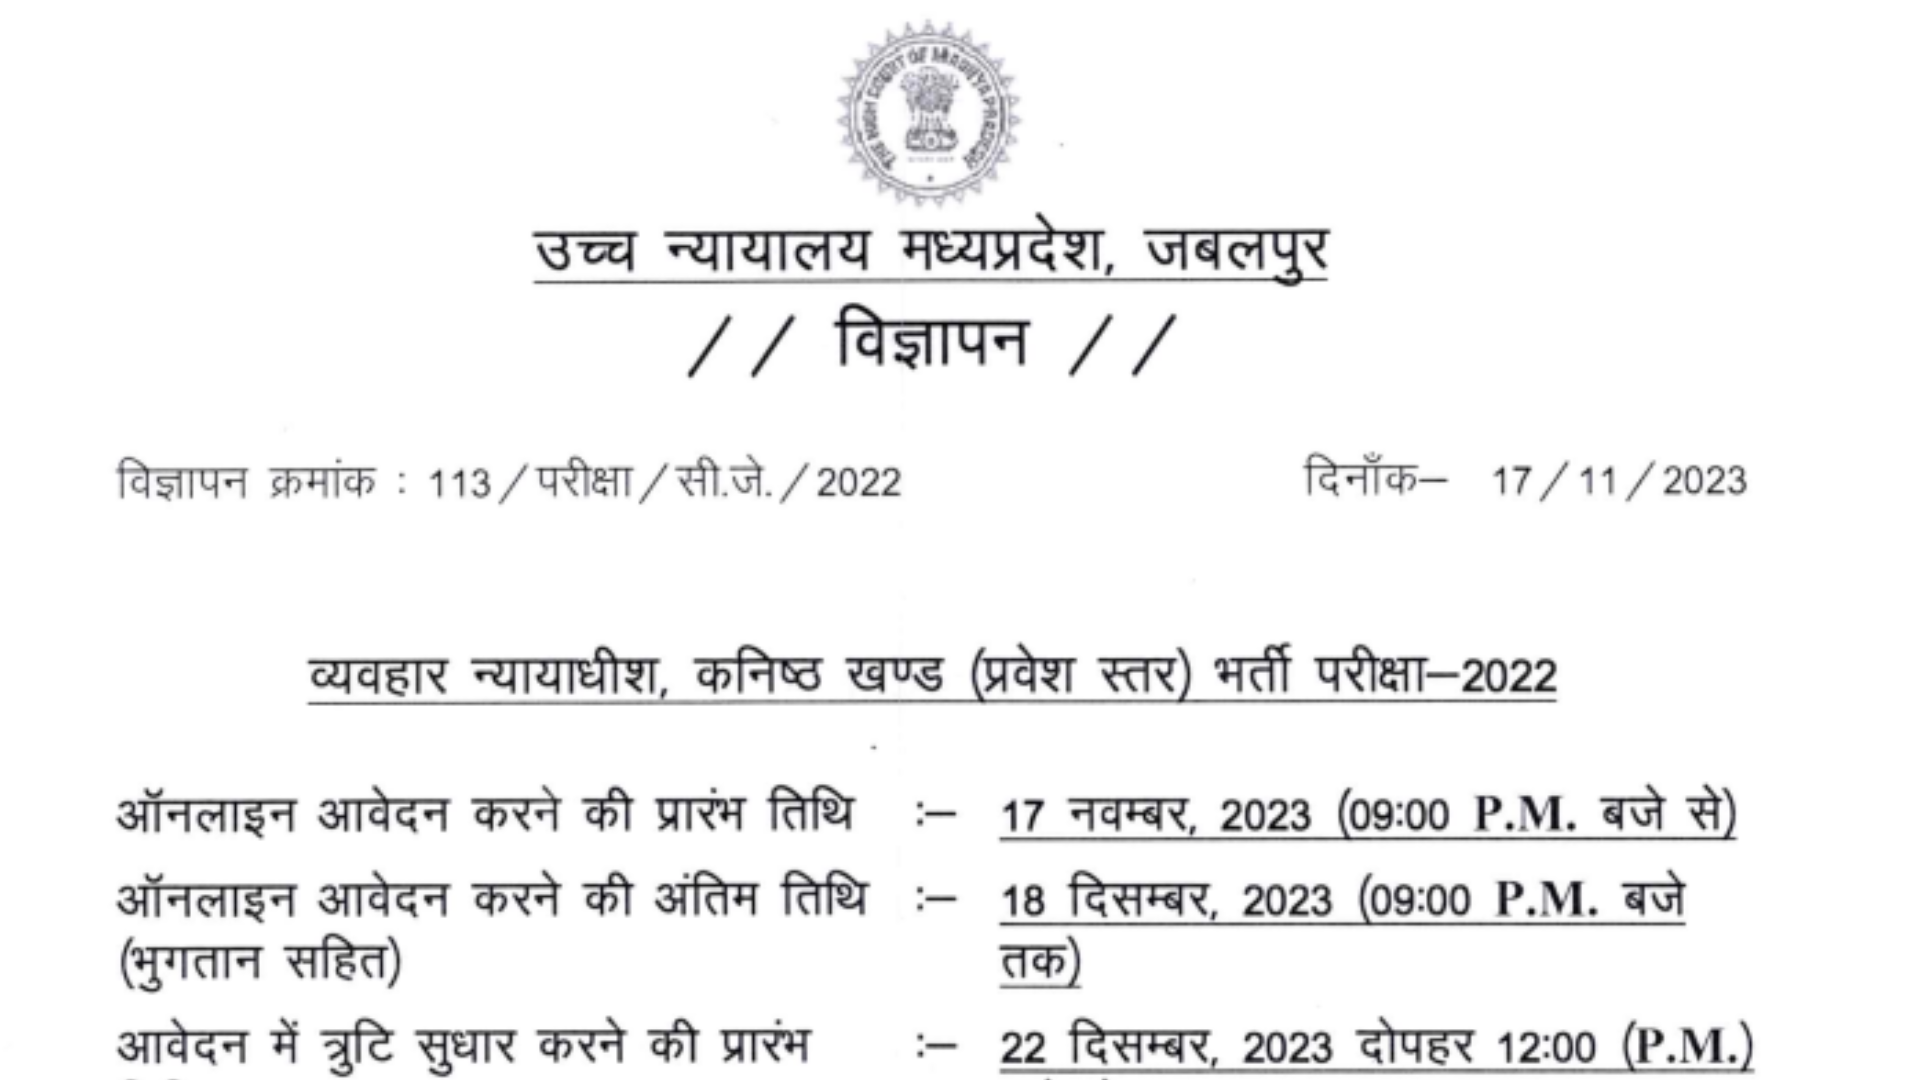 Madhya Pradesh High Court MPHC Civil Judge Recruitment 2023 Apply Online for 199 Post